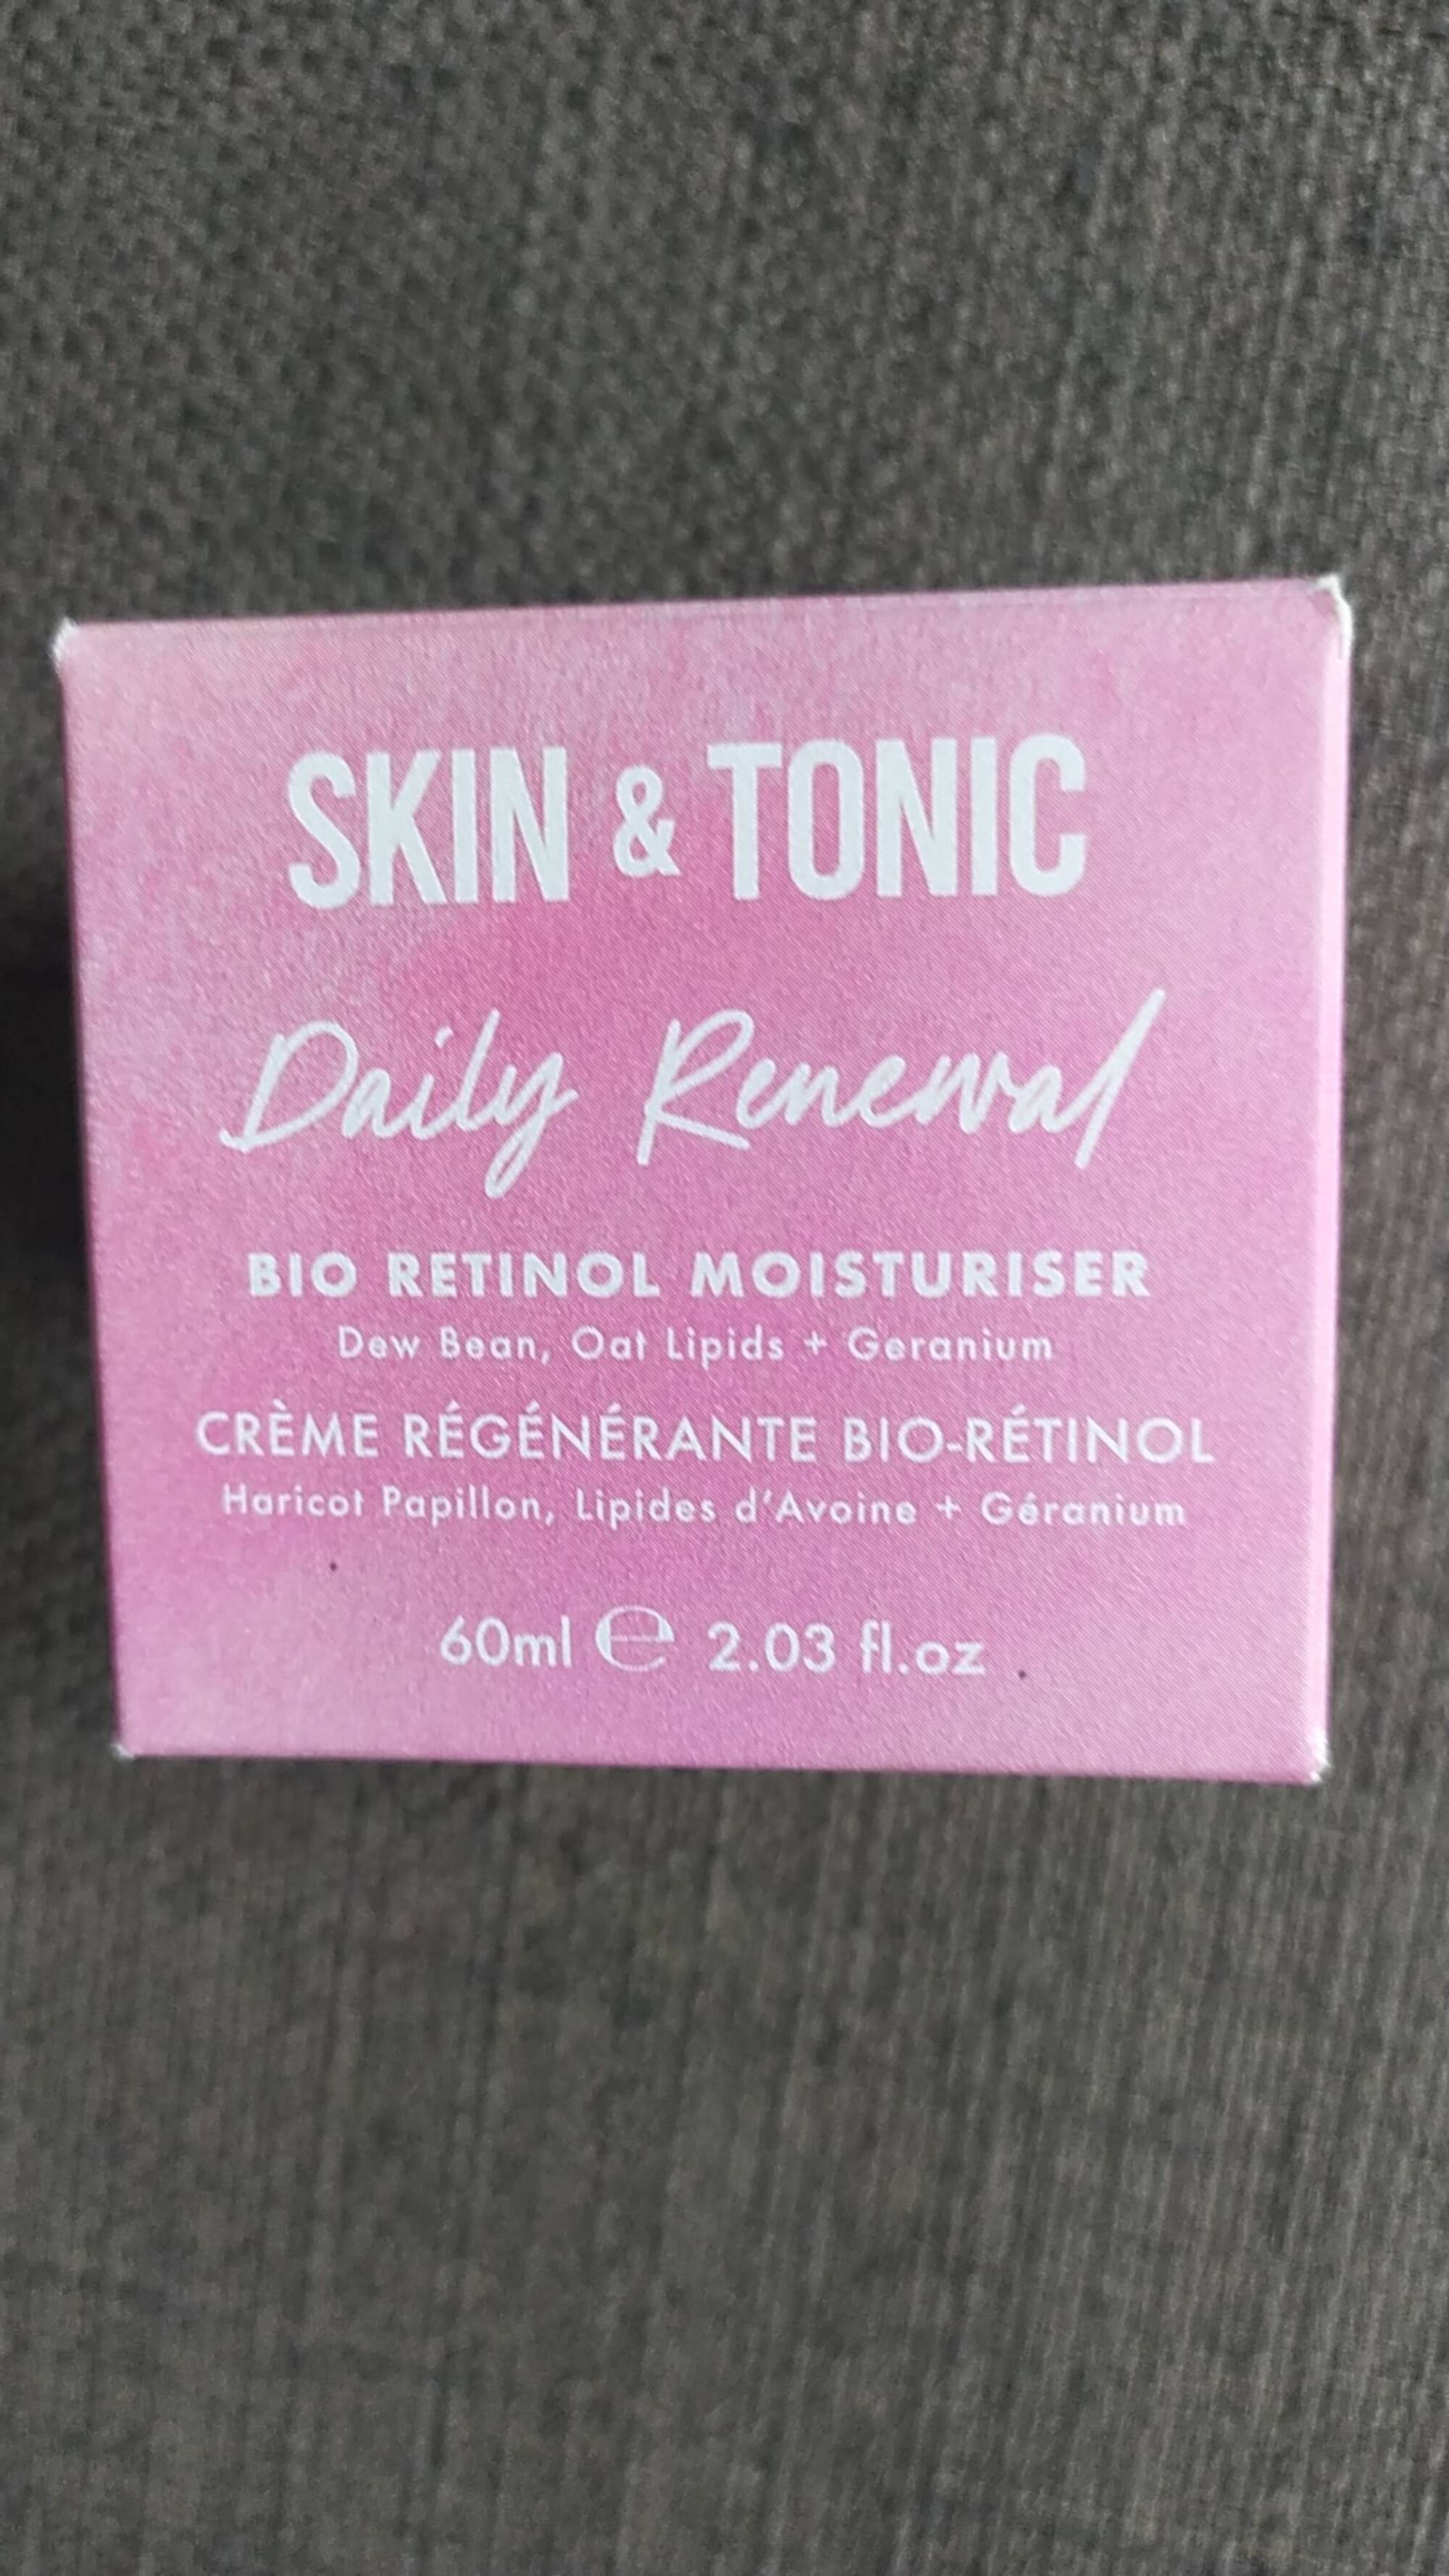 SKIN & TONIC - Daily renewal - Crème régénérante bio-rétinol